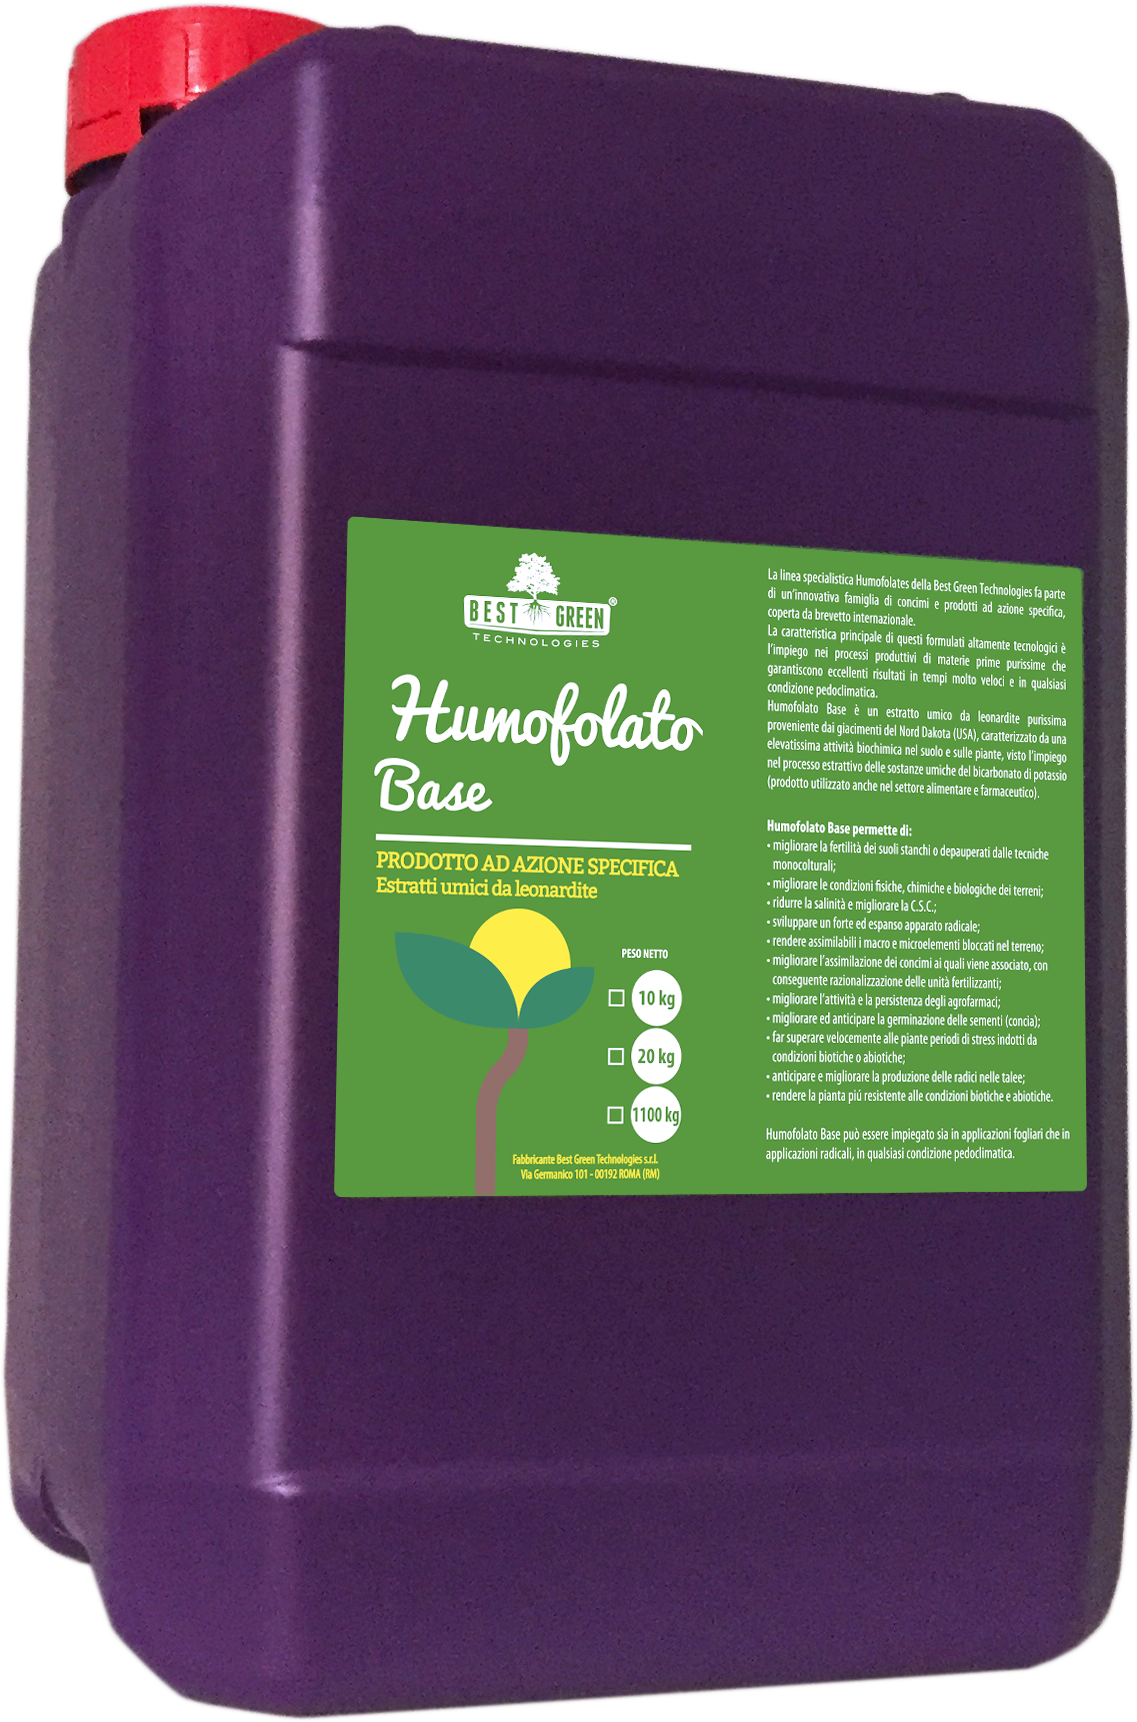 Humofolate base